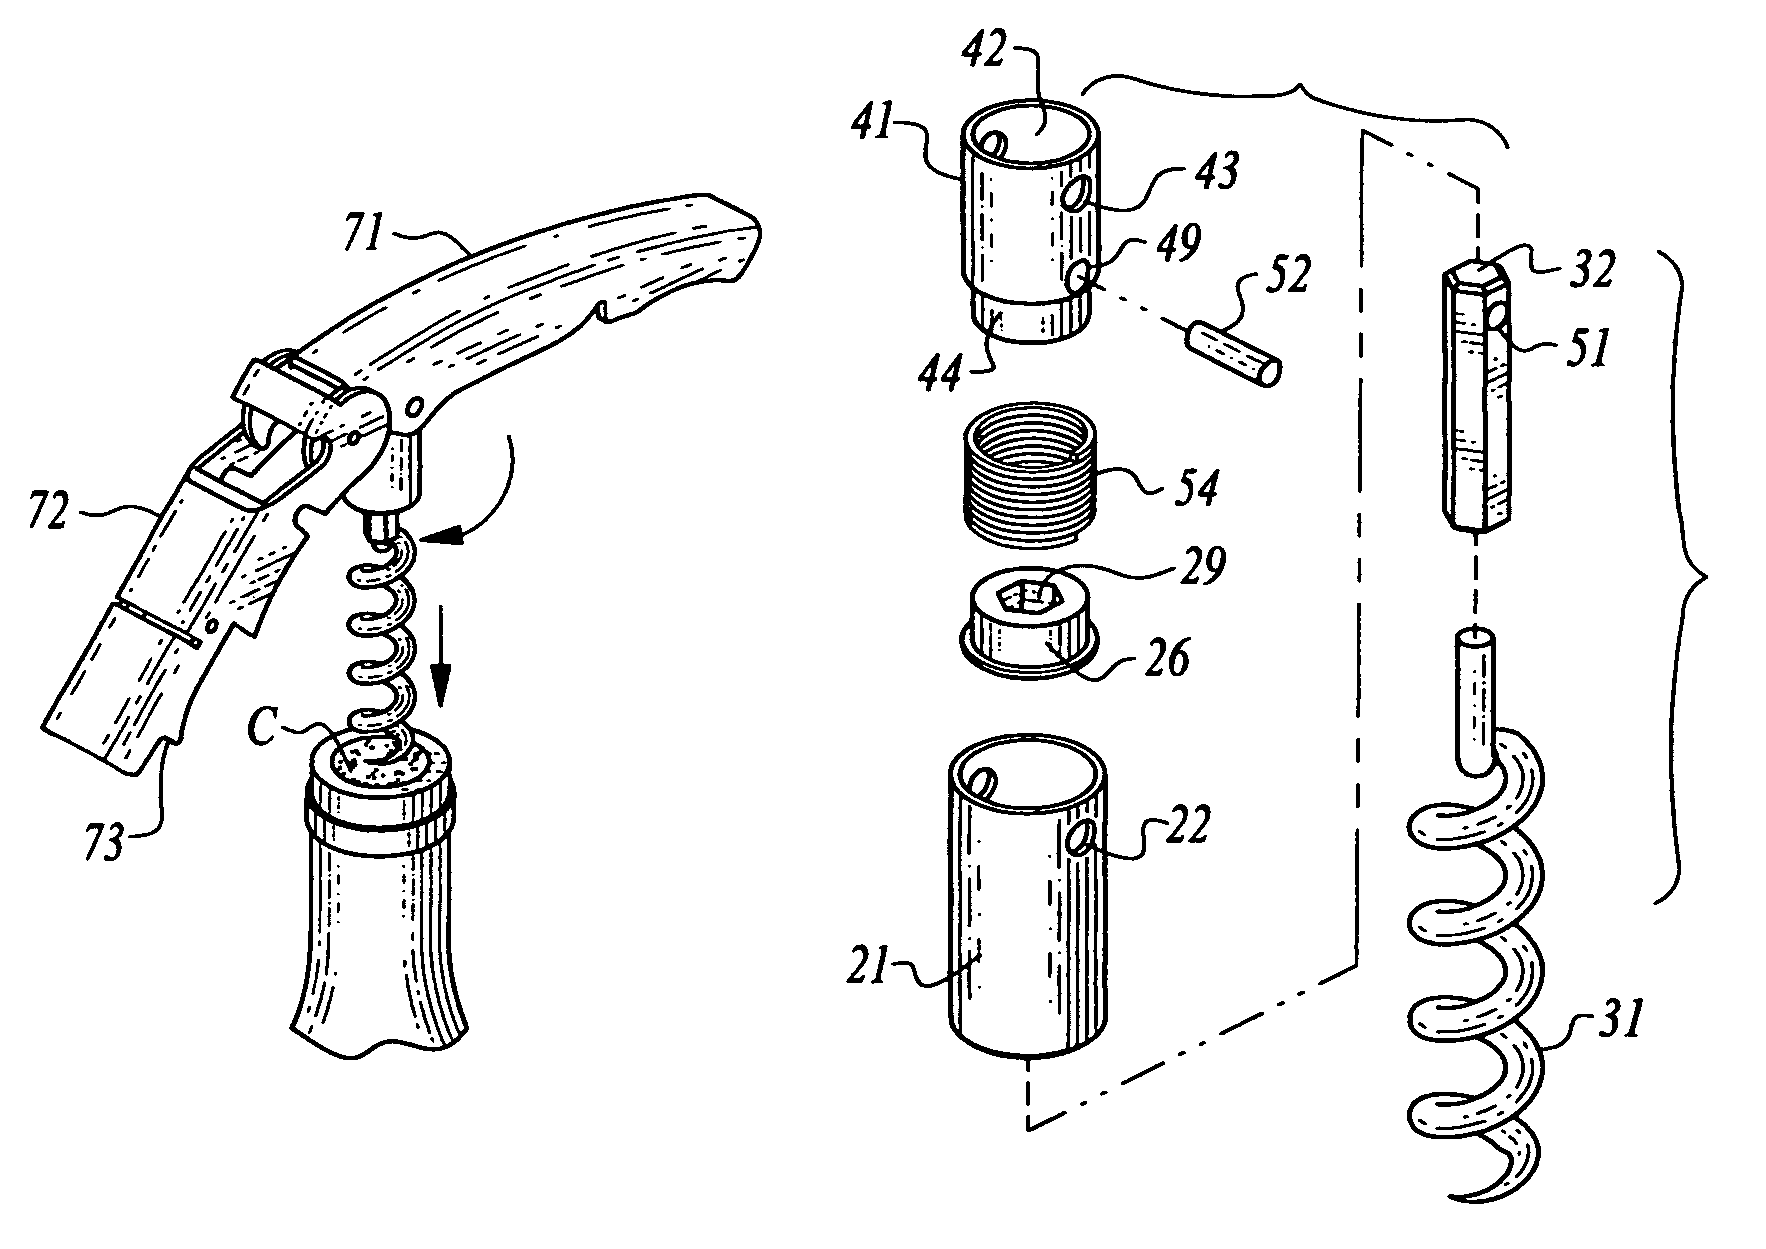 Corkscrew with unidirectional clutch drive